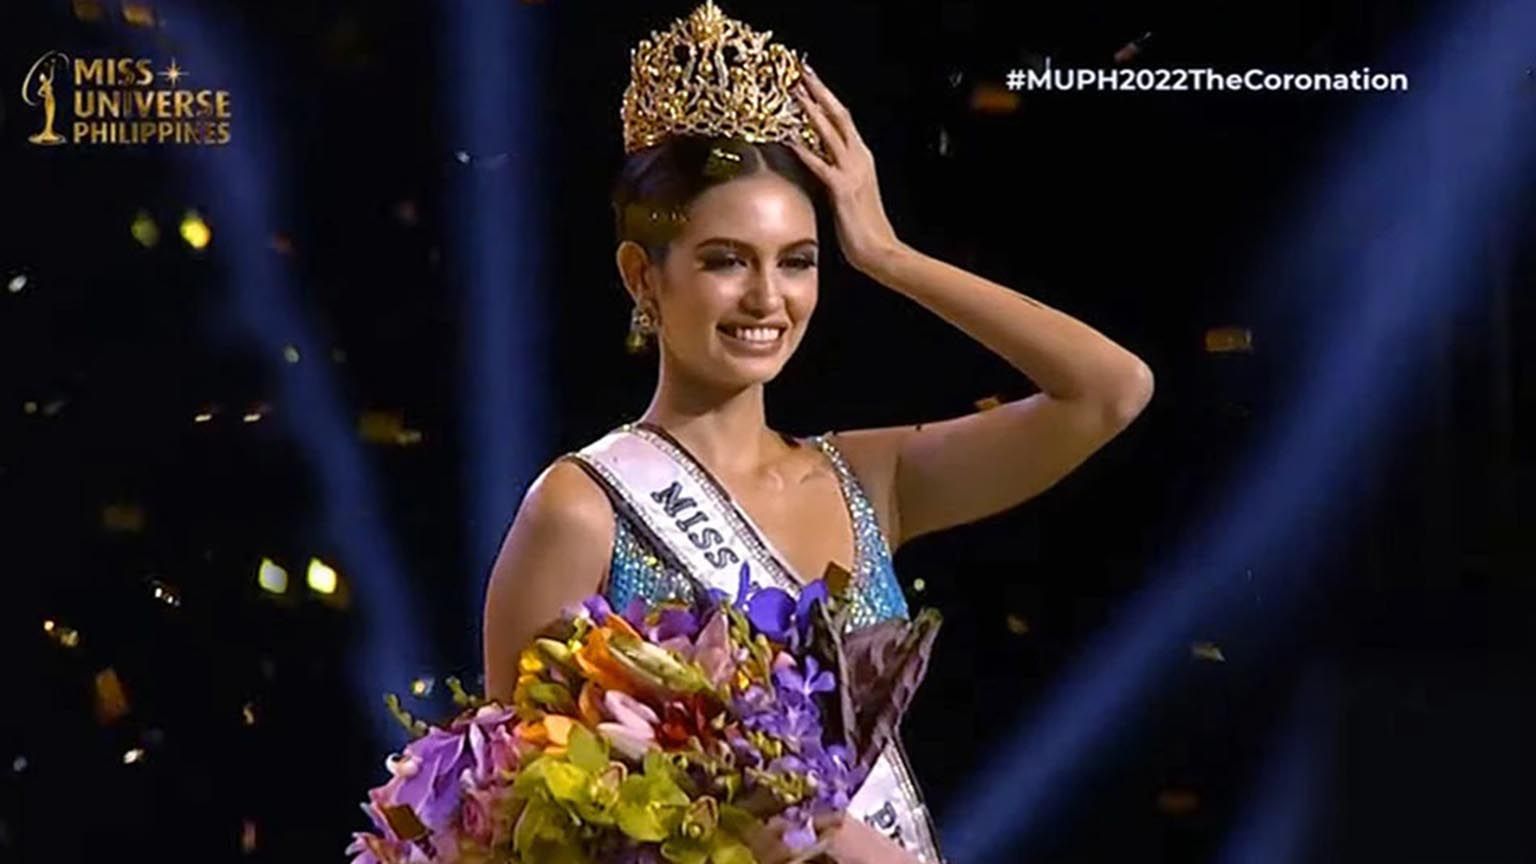 Celeste Cortesi is Miss Universe Philippines 2022 photo Rappler